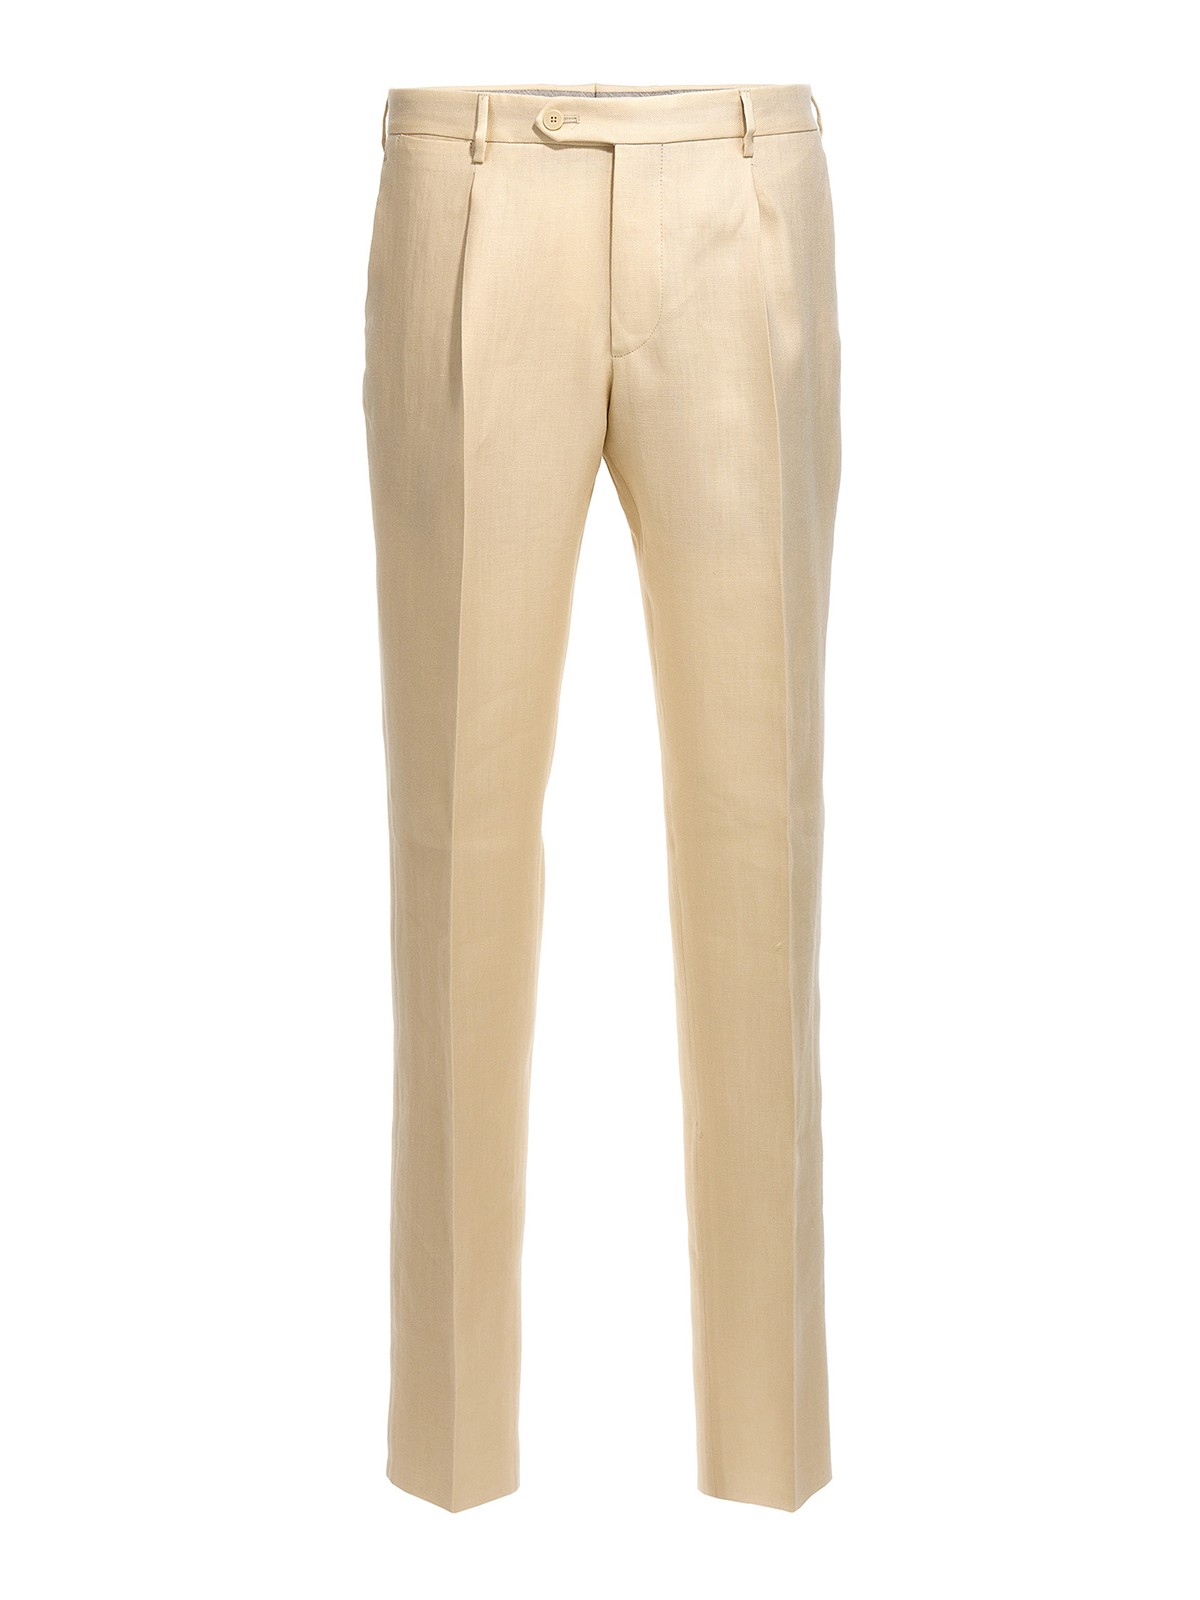 Buy Monte Carlo Mens Polyester Formal Pants (2220840812Cf-2-34, Dark Grey,  34) at Amazon.in